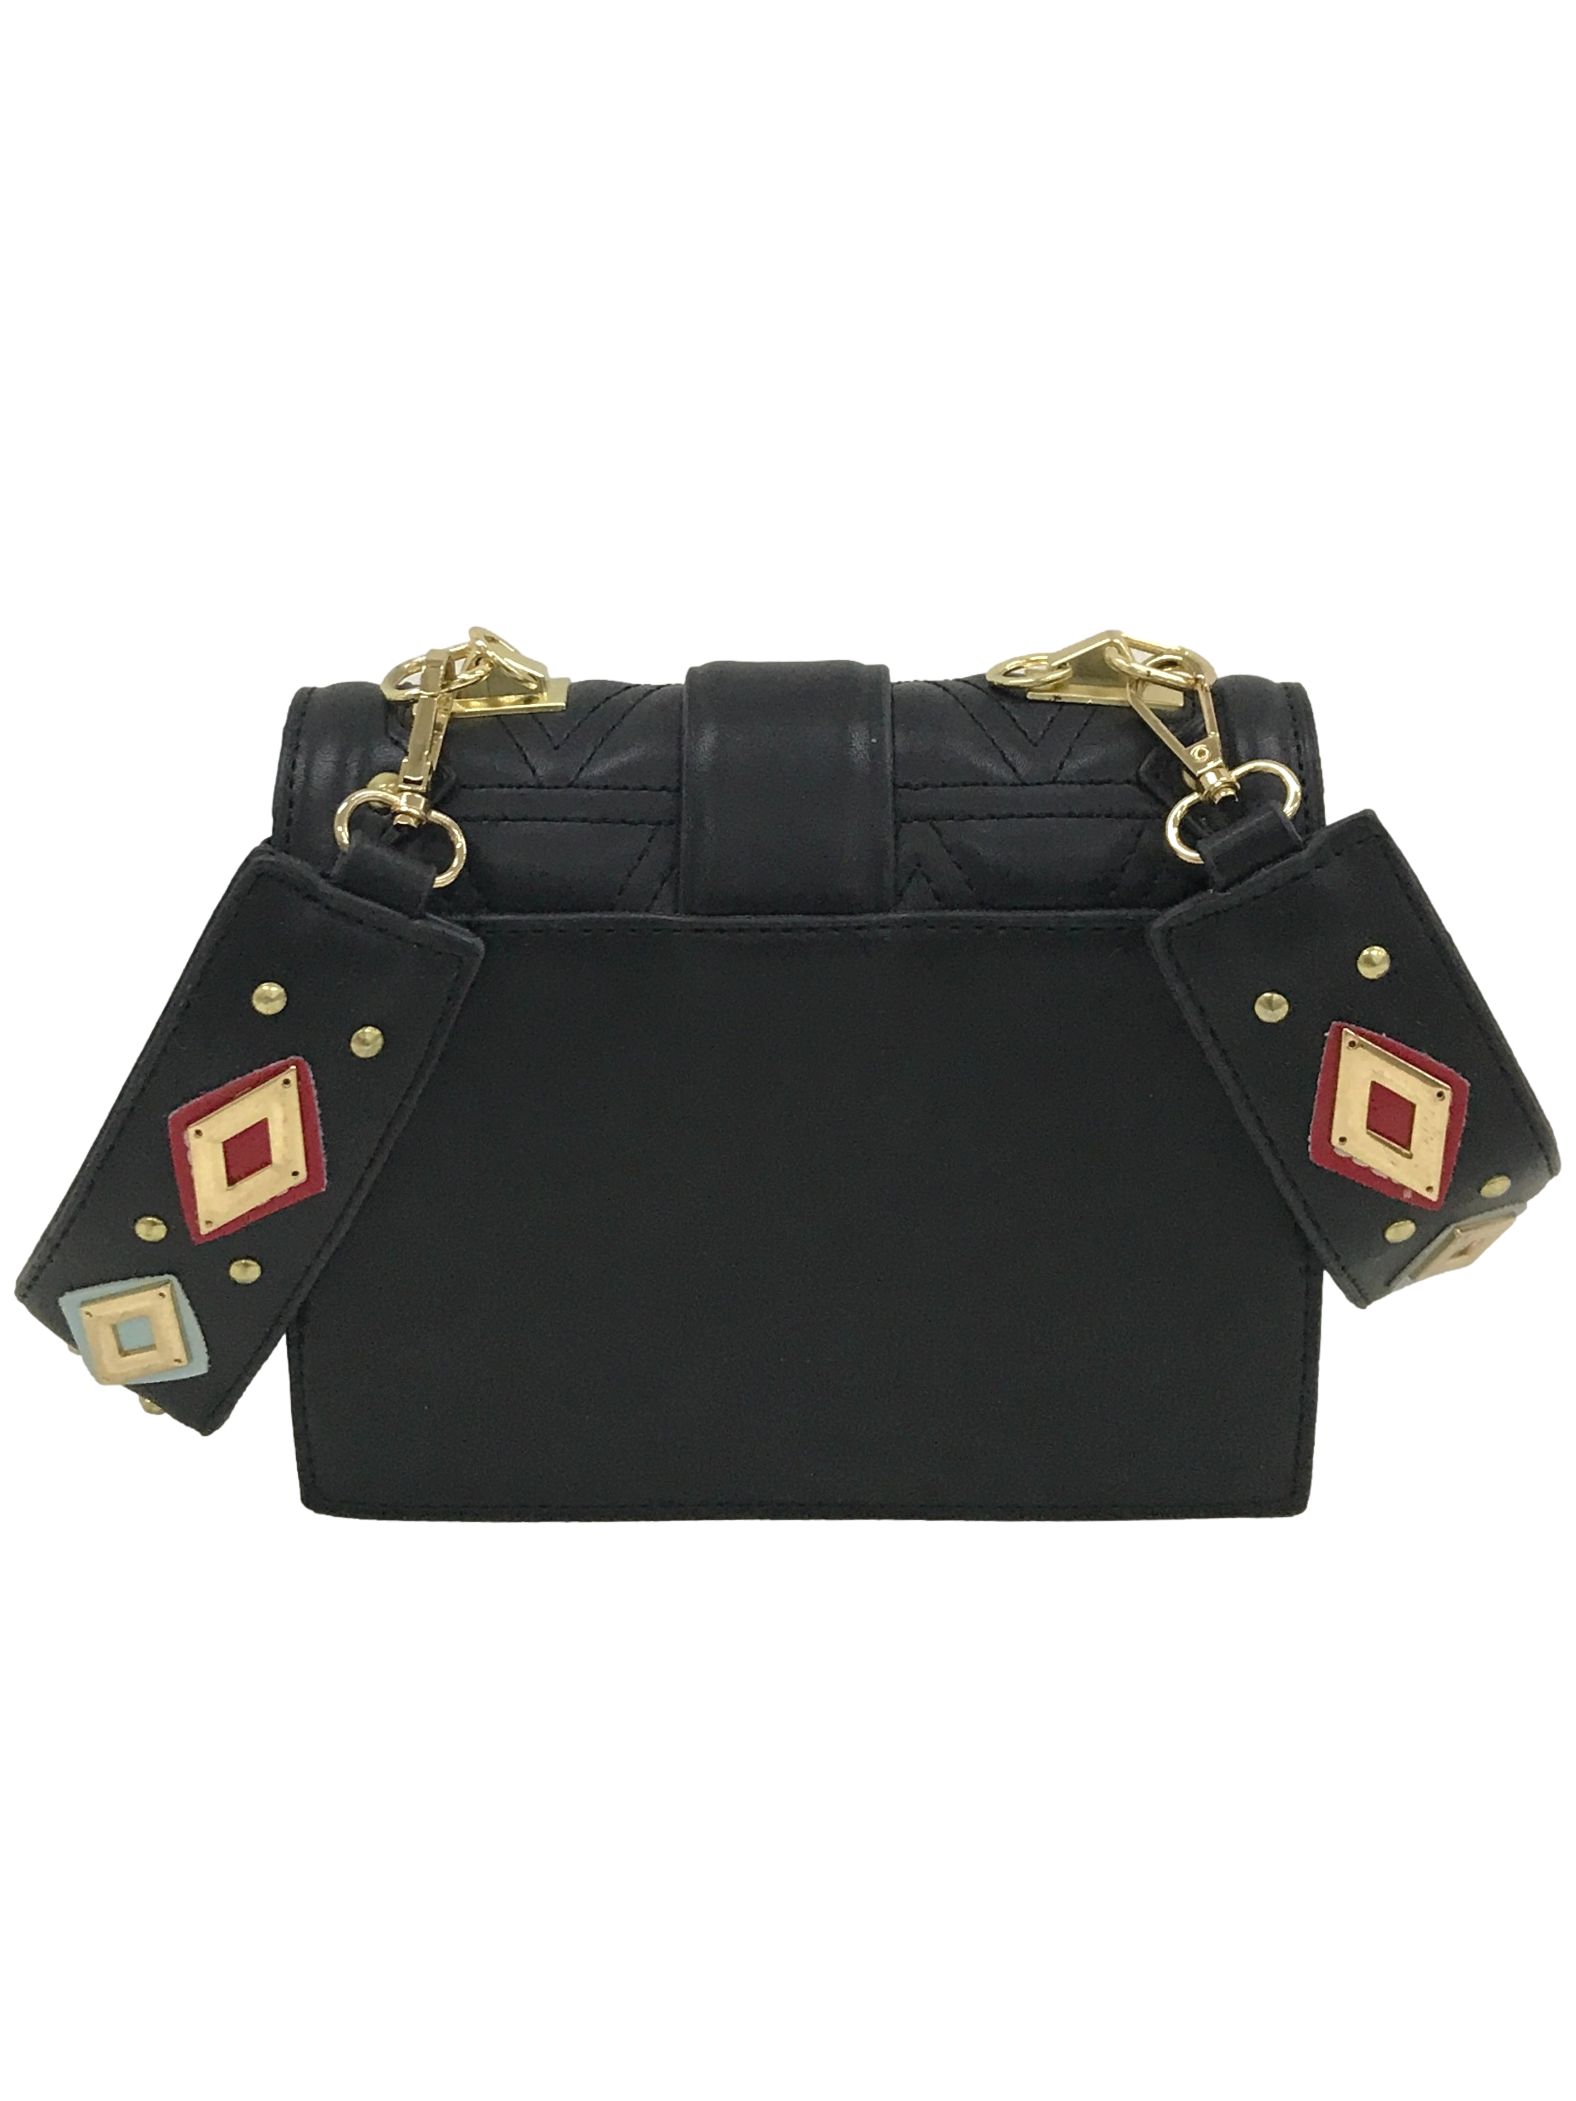 Black Diamond Straps Studded Bag